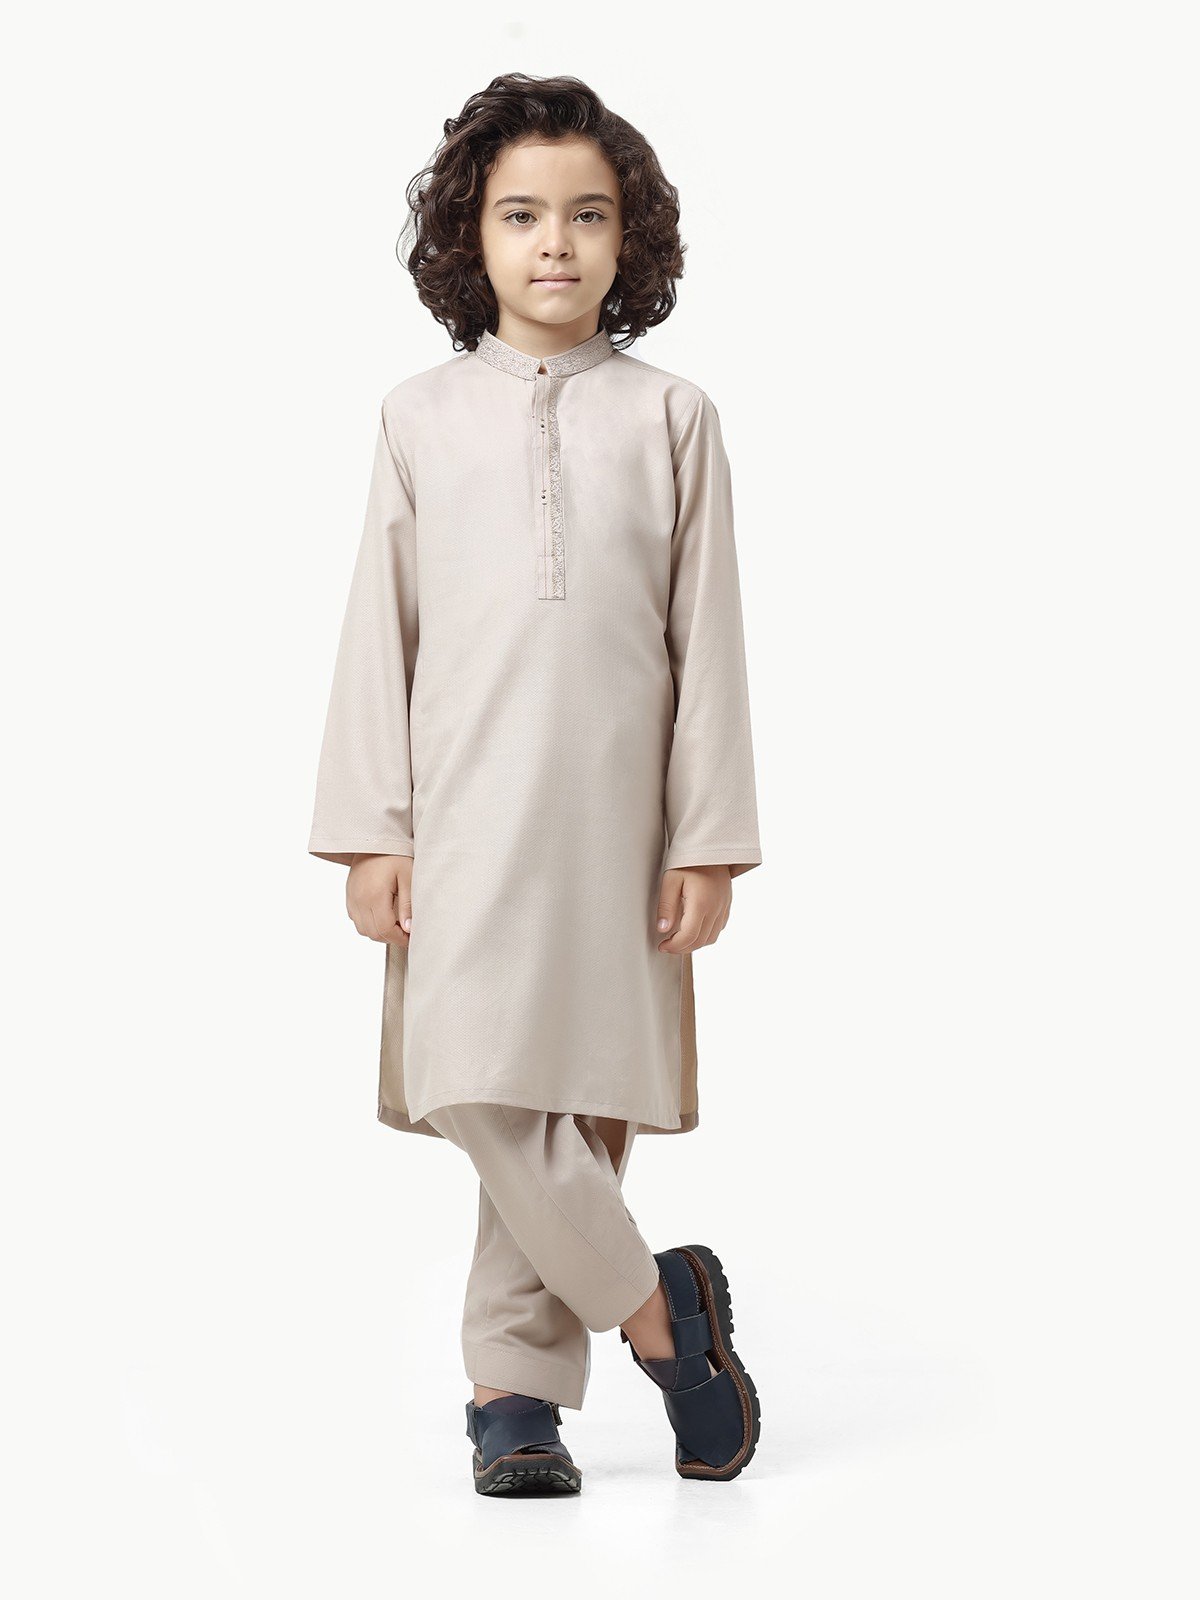 edenrobe Boy's Beige Kurta Shalwar - EBTKS23-3871 – edenrobe Pakistan